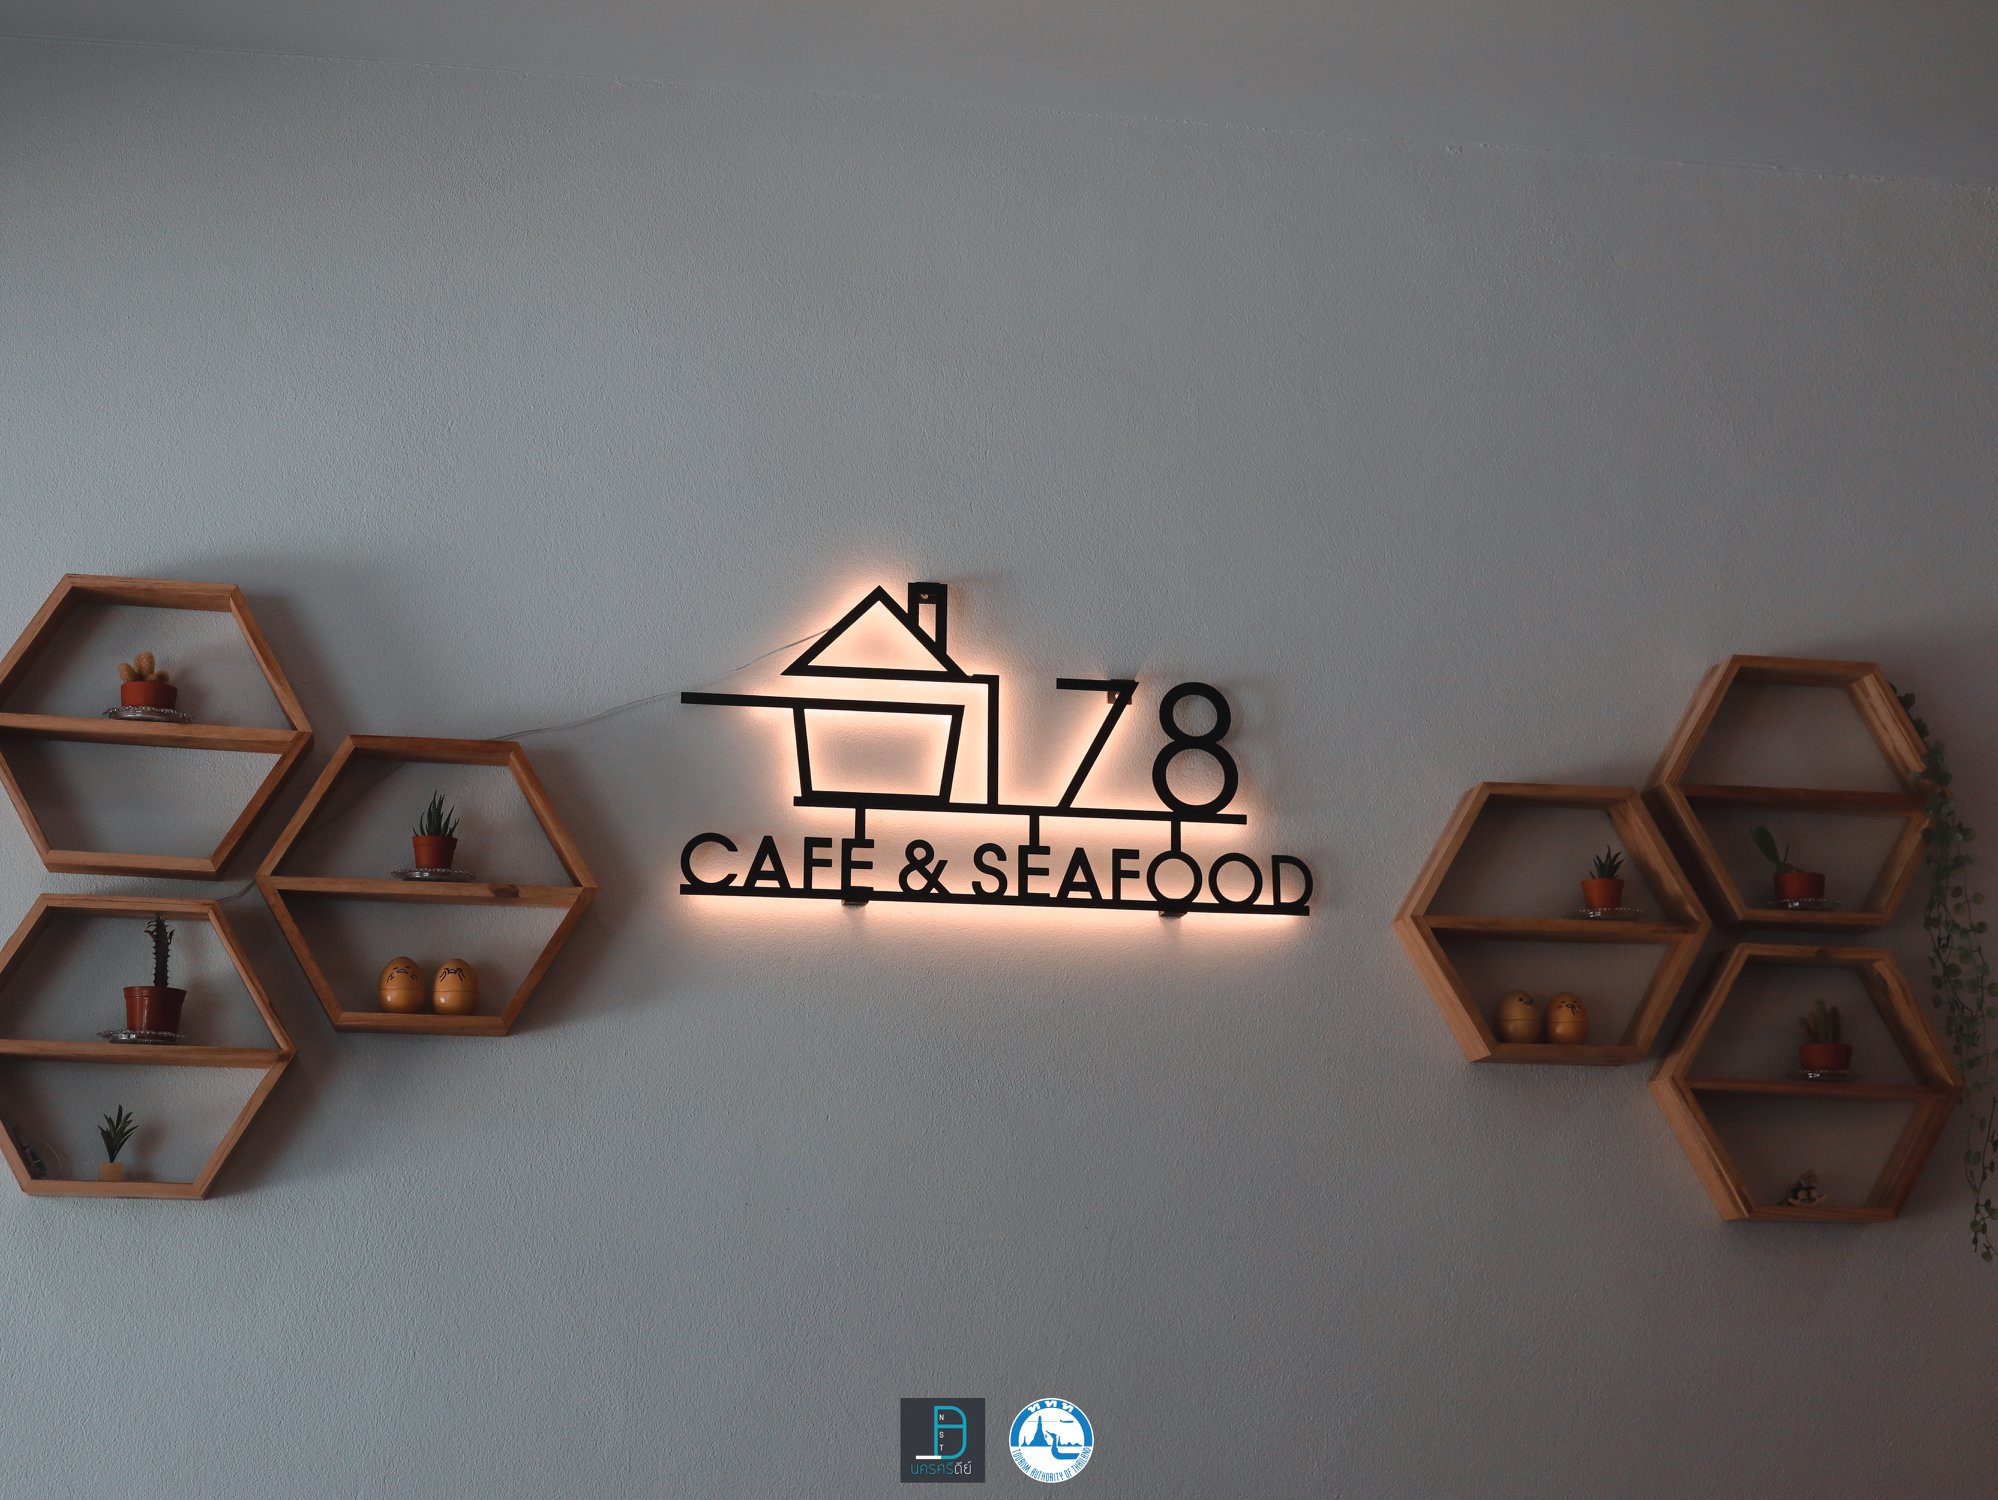  2.-178-Cafe-Seafood
จัดไปสำหรับจุดนี้เป็นคาเฟ่-กับร้านอาหารสไตล์ซีฟู๊ด-ขอบอกว่าเด็ดดดด คาเฟ่,สตูล,เด็ด,จุดเช็คอิน,อร่อย,ร้านอาหาร,จุดถ่ายรูป,สถานที่ท่องเที่ยว